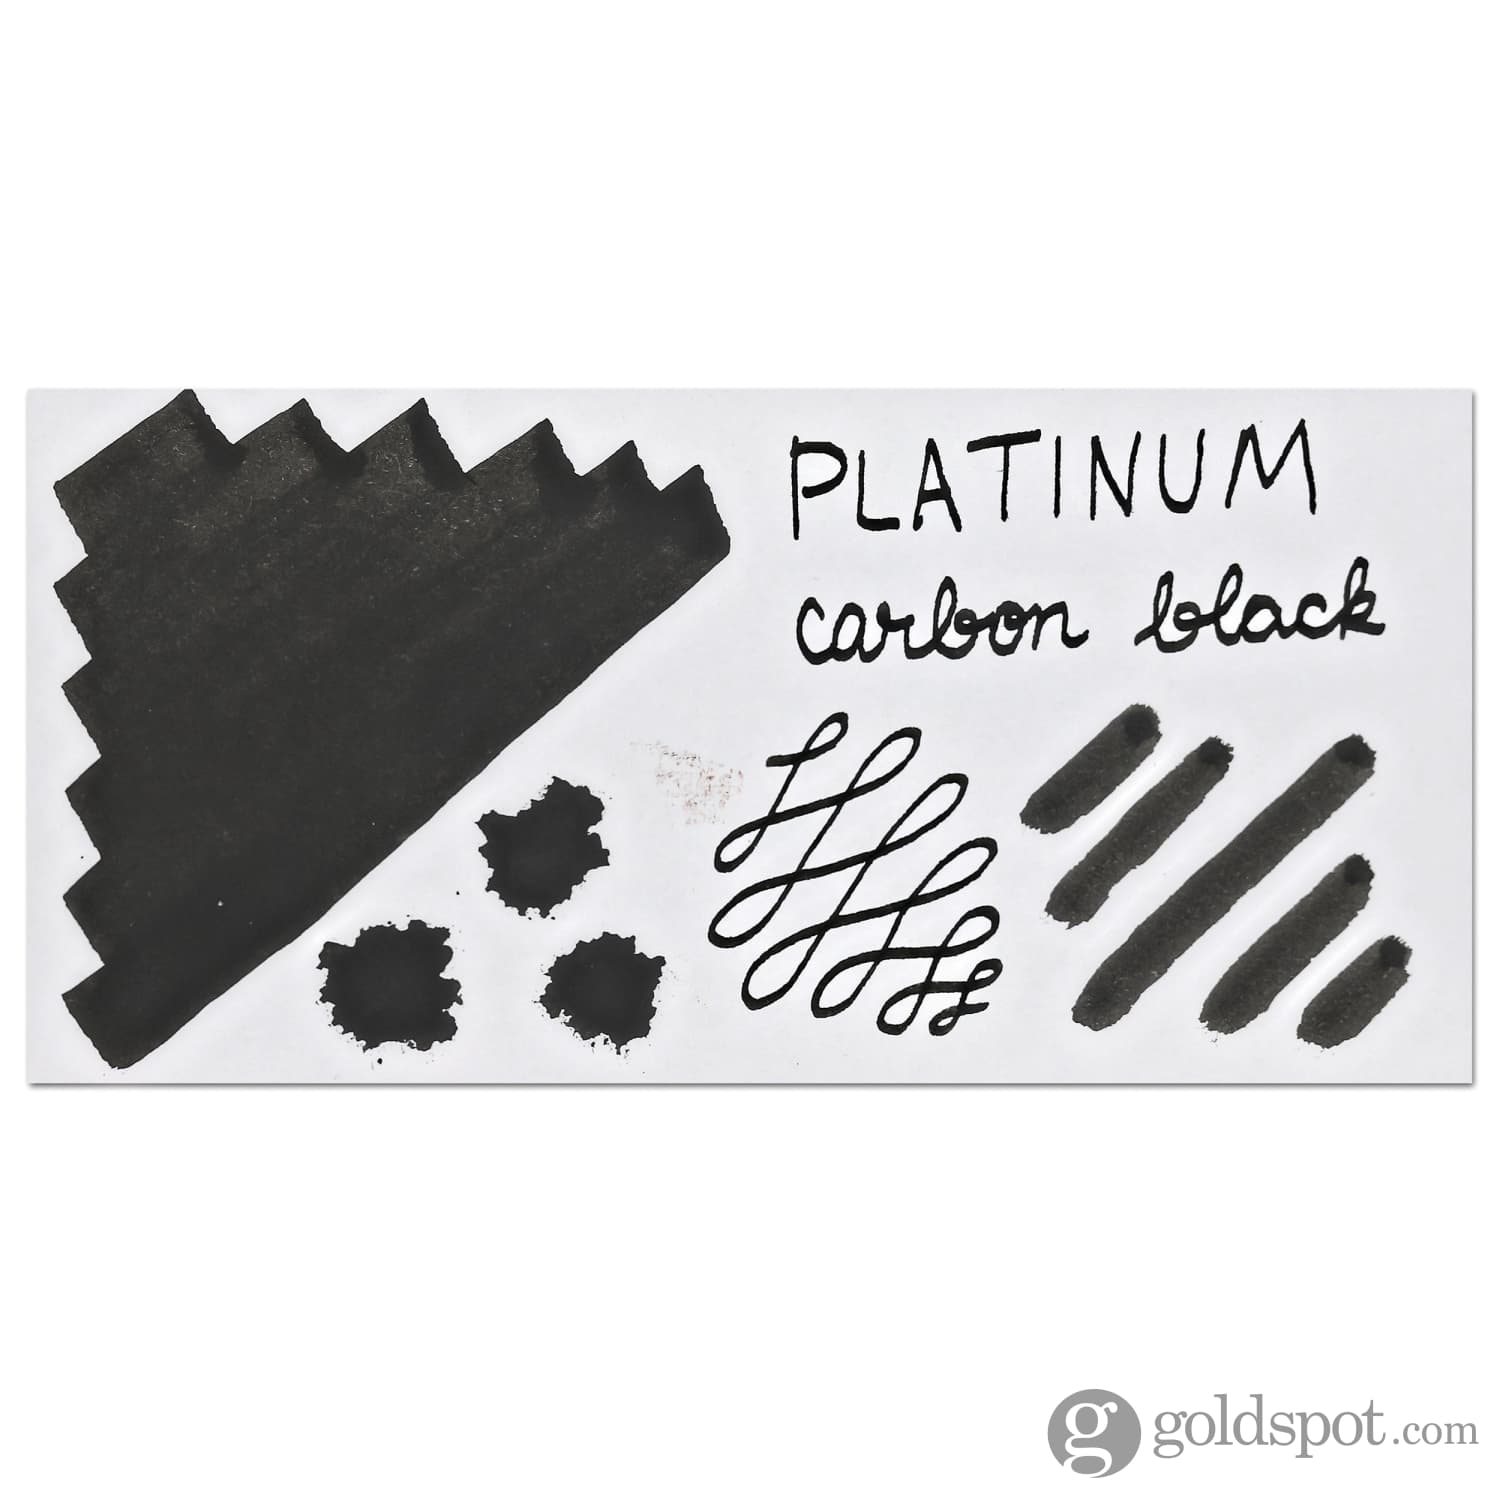 Platinum Carbon Black  Carbon black, Fountain pen ink, Ink wash